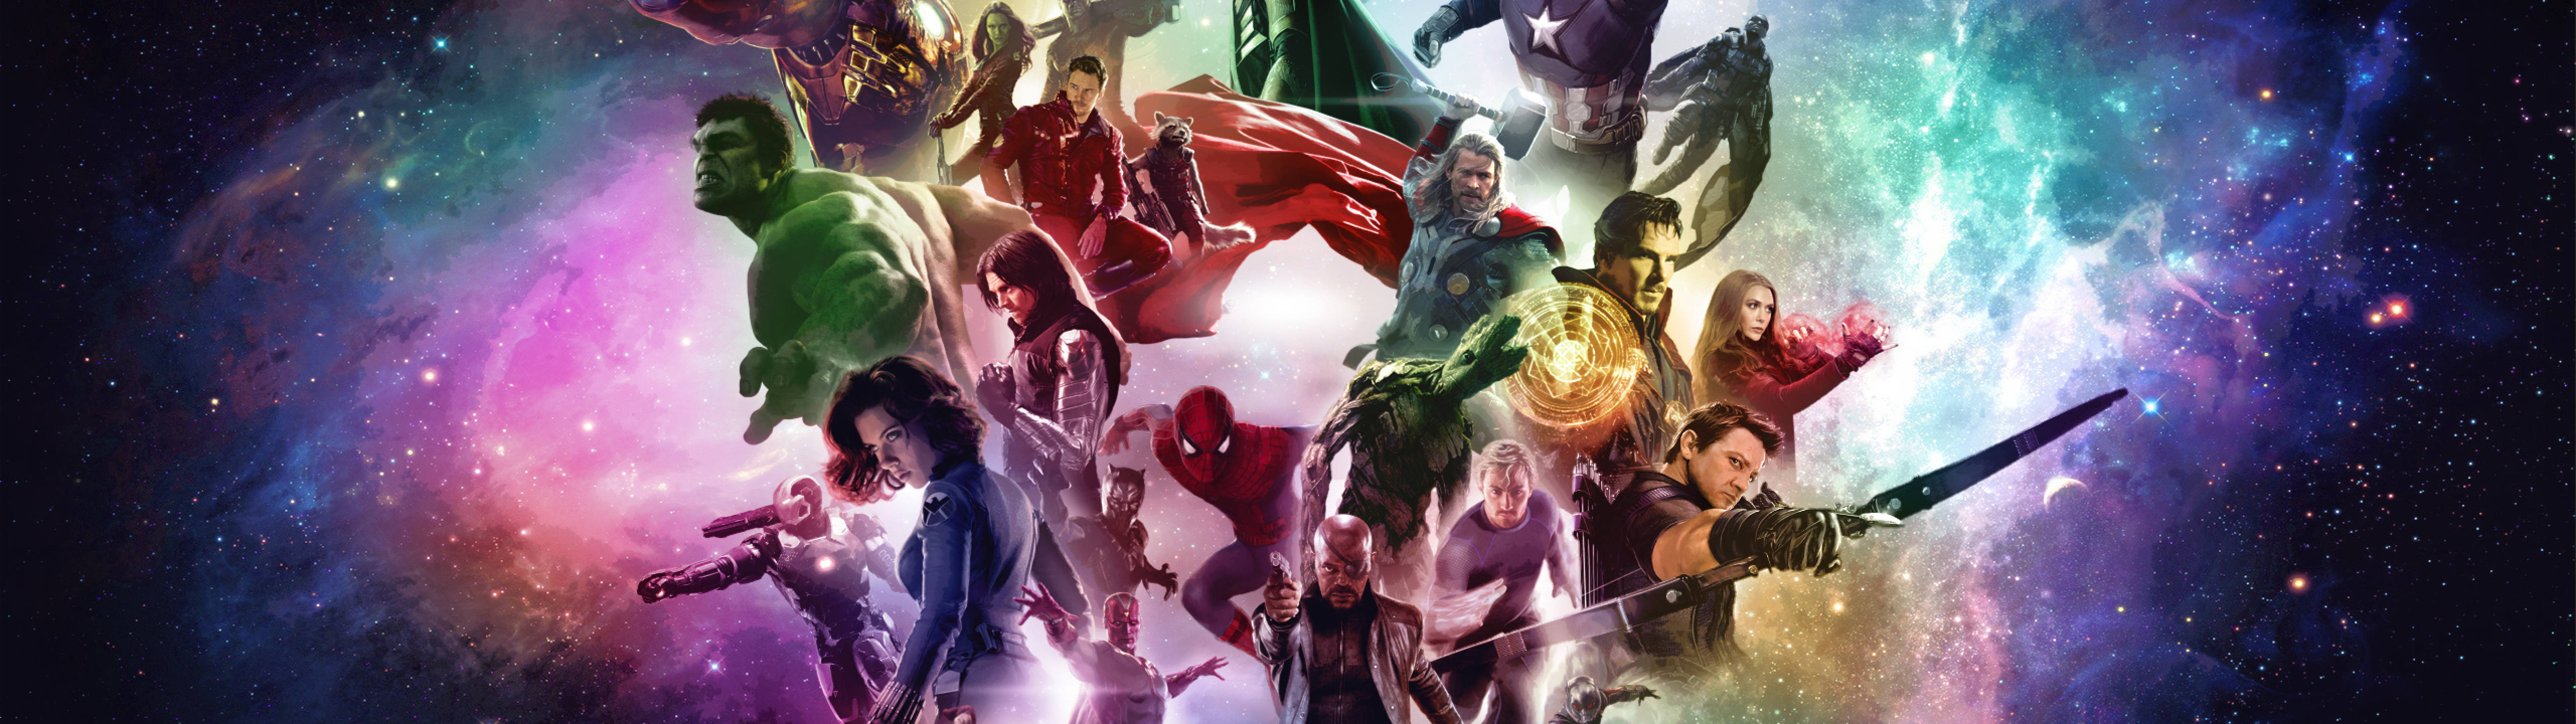 Marvel Heroes Together 5120 X 1440 Background